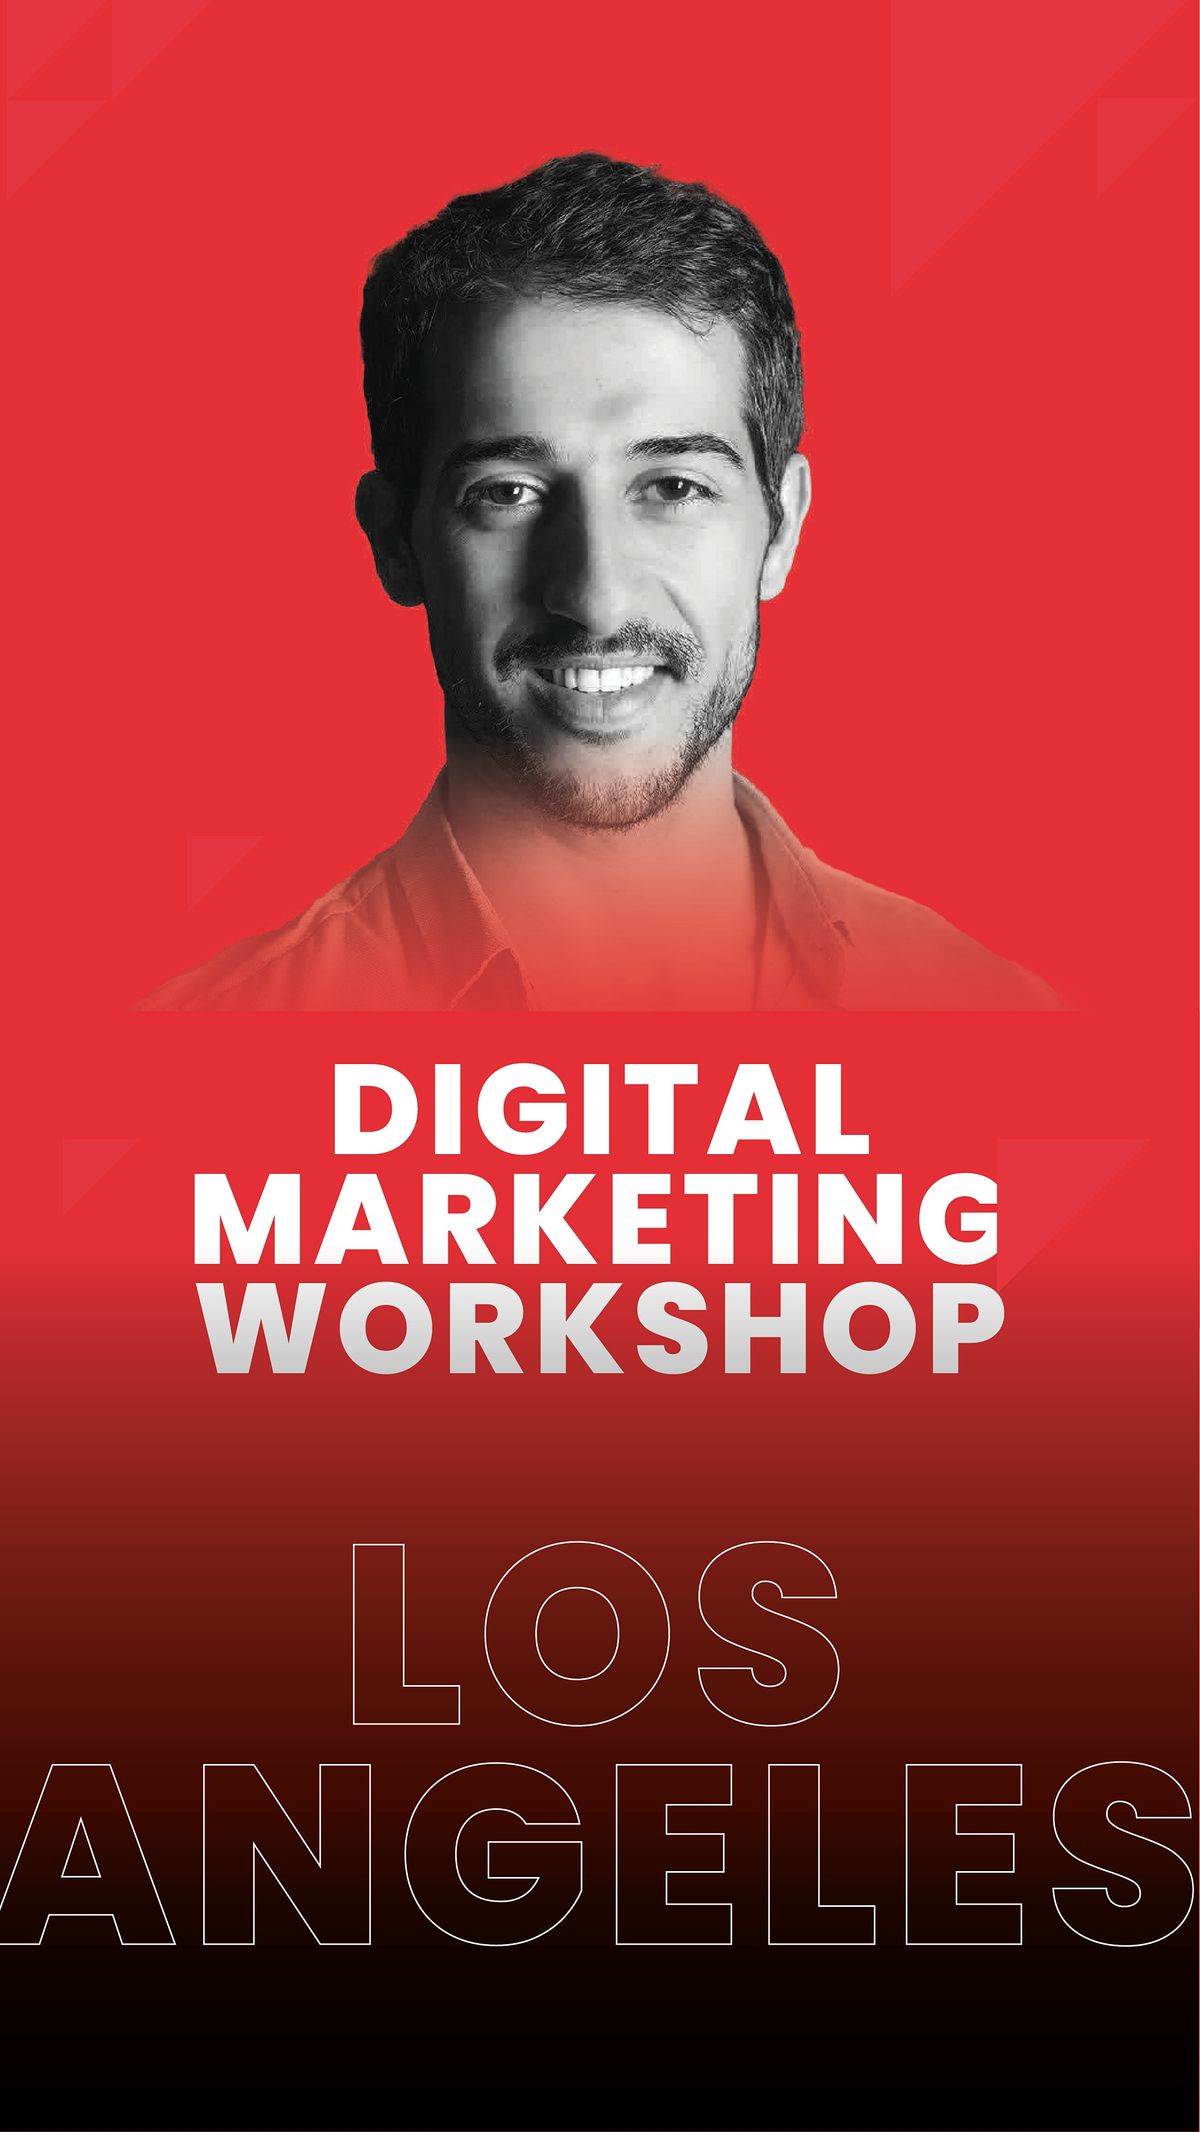 Free Digital Marketing Workshop in L.A